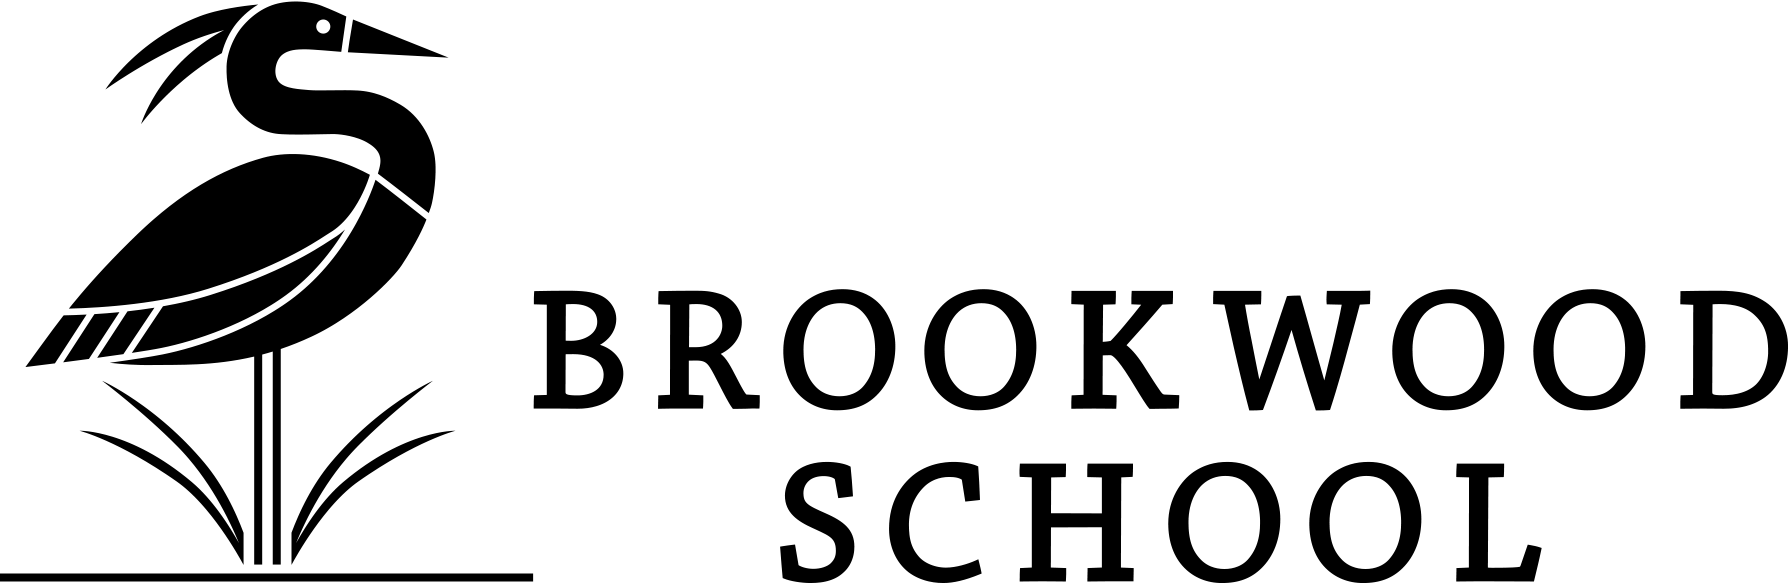 Brookwood School Strategic Plan